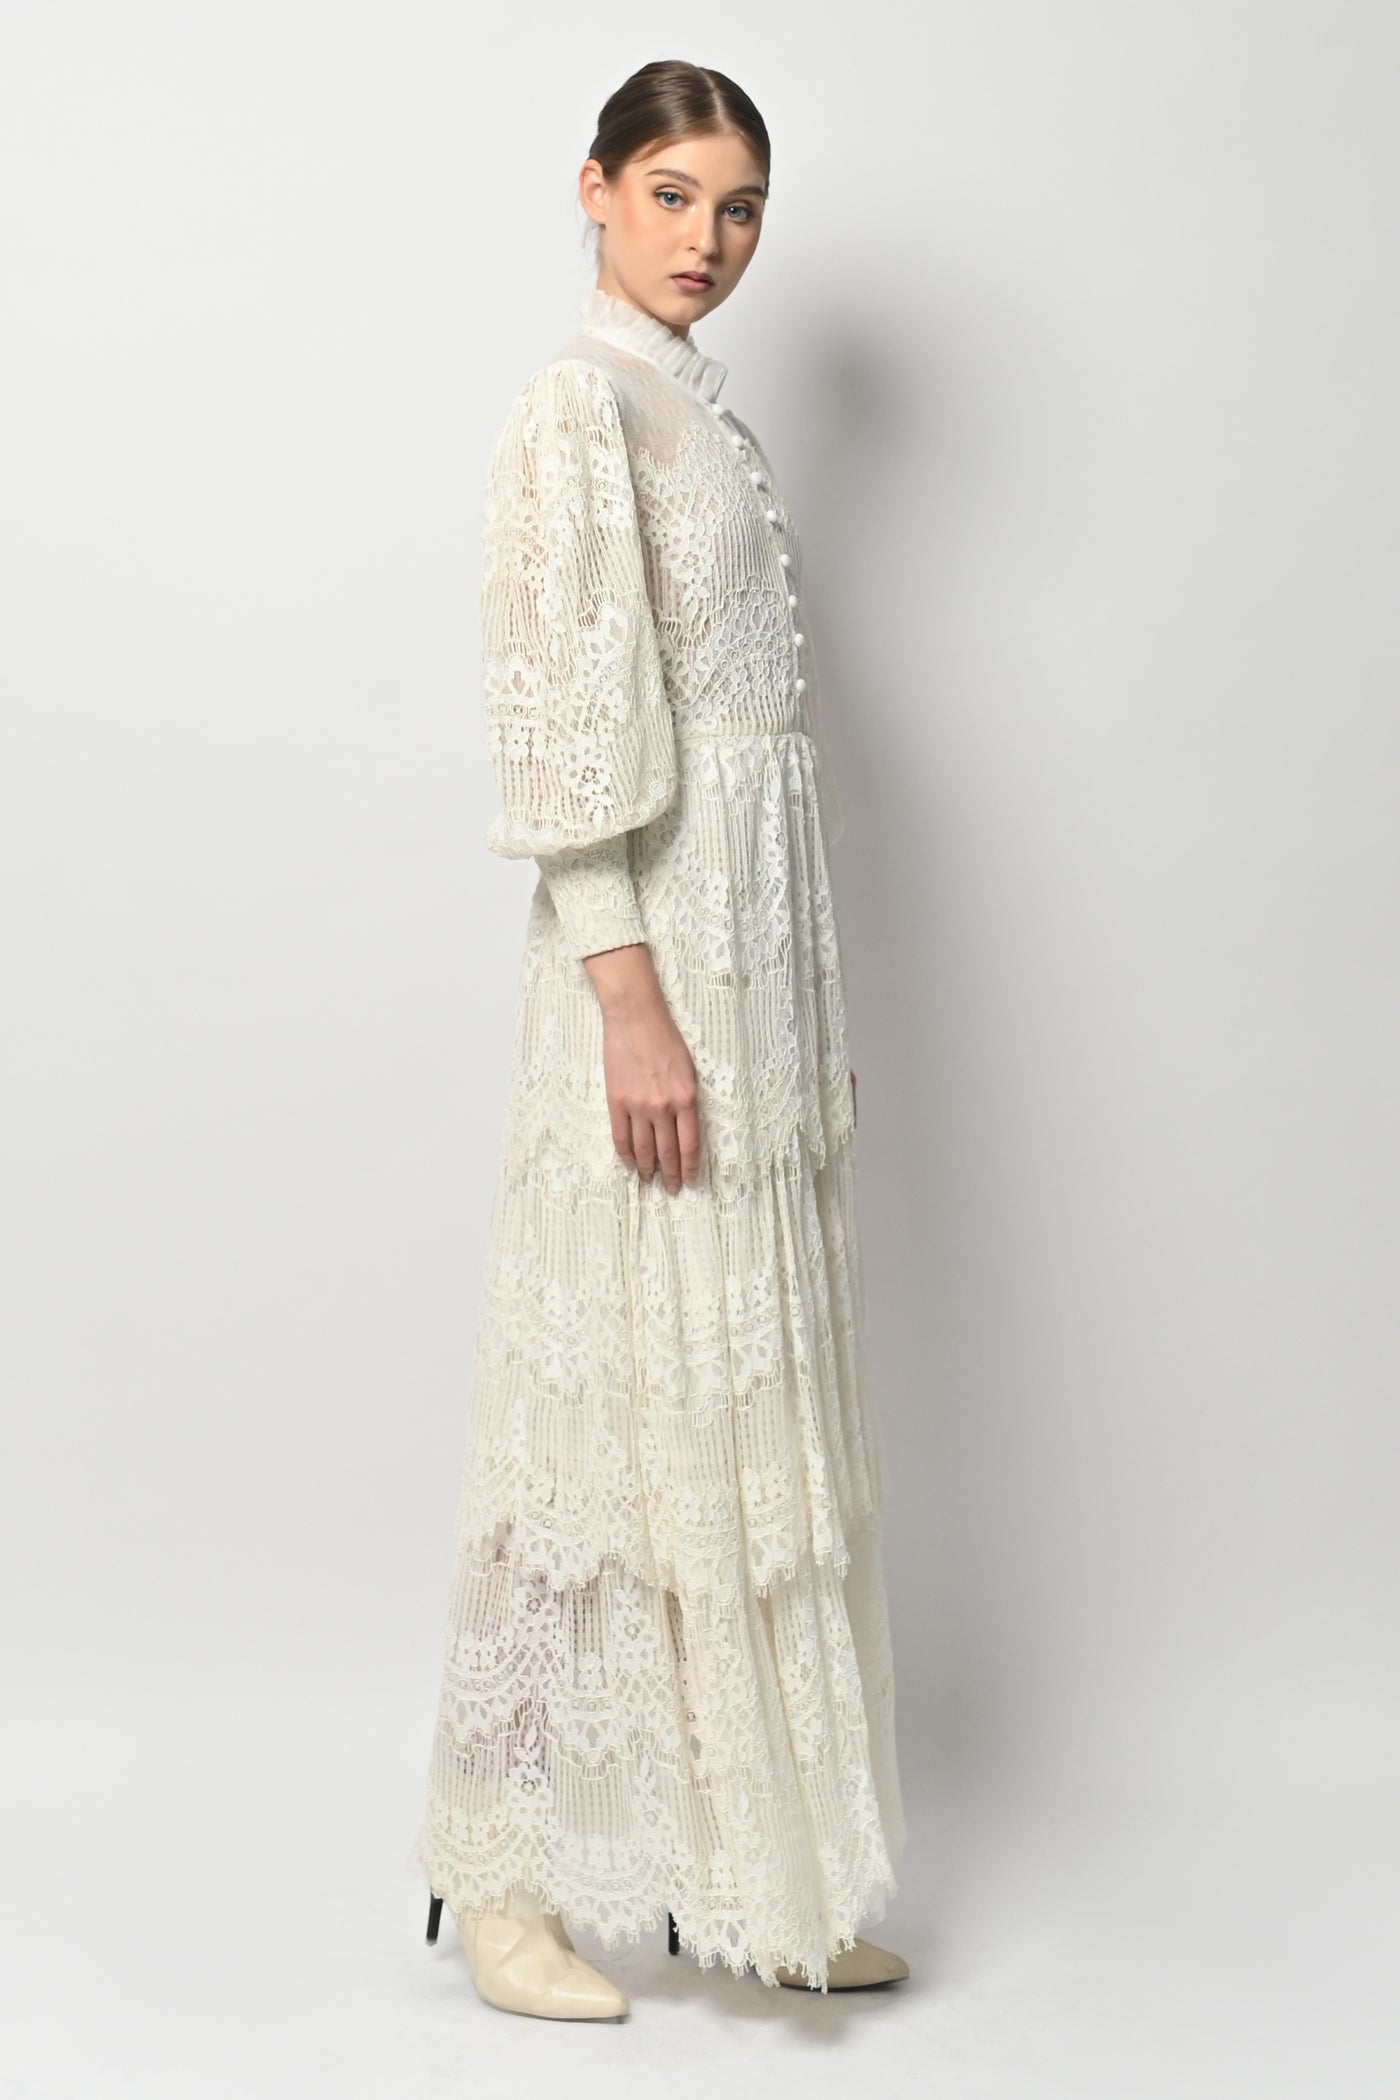 Kalula Dress in White